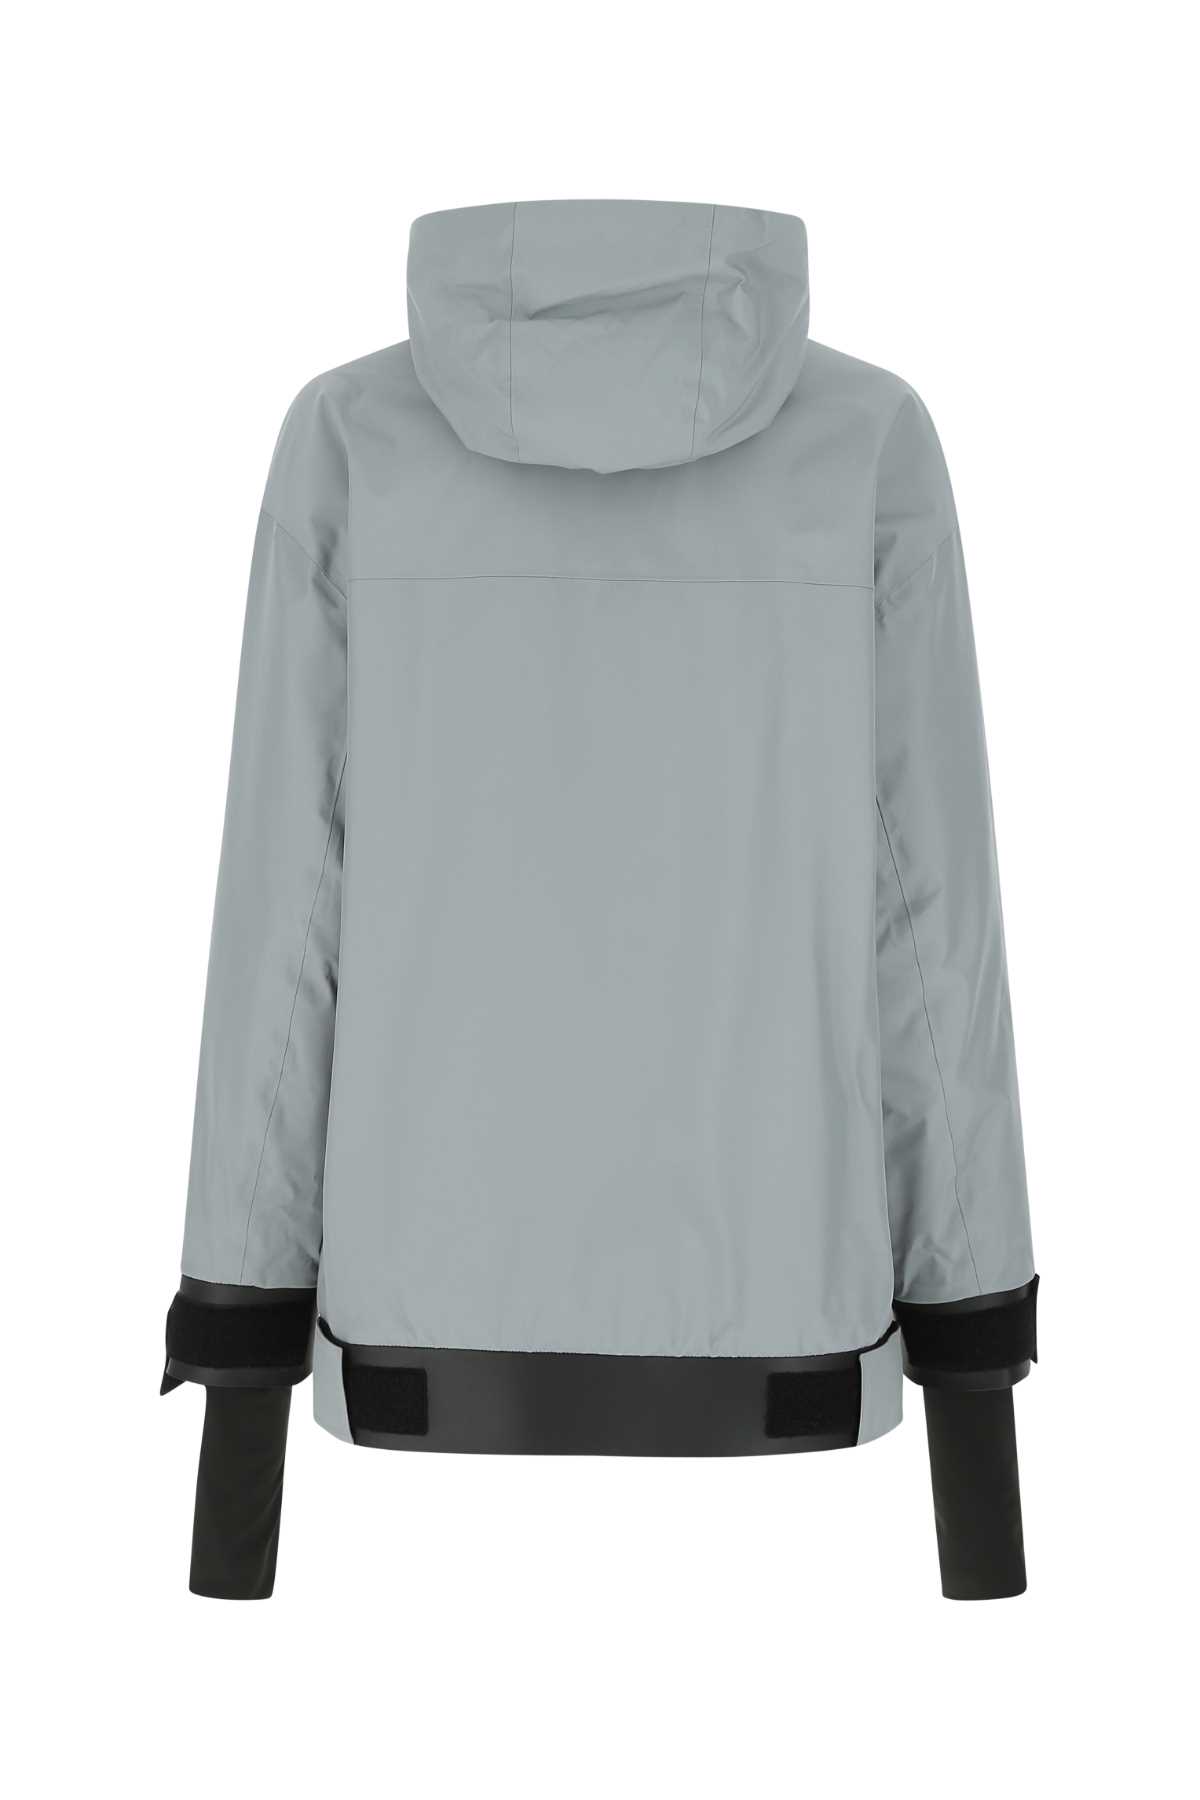 Prada Grey Gore-texâ® Padded Jacket In F0024